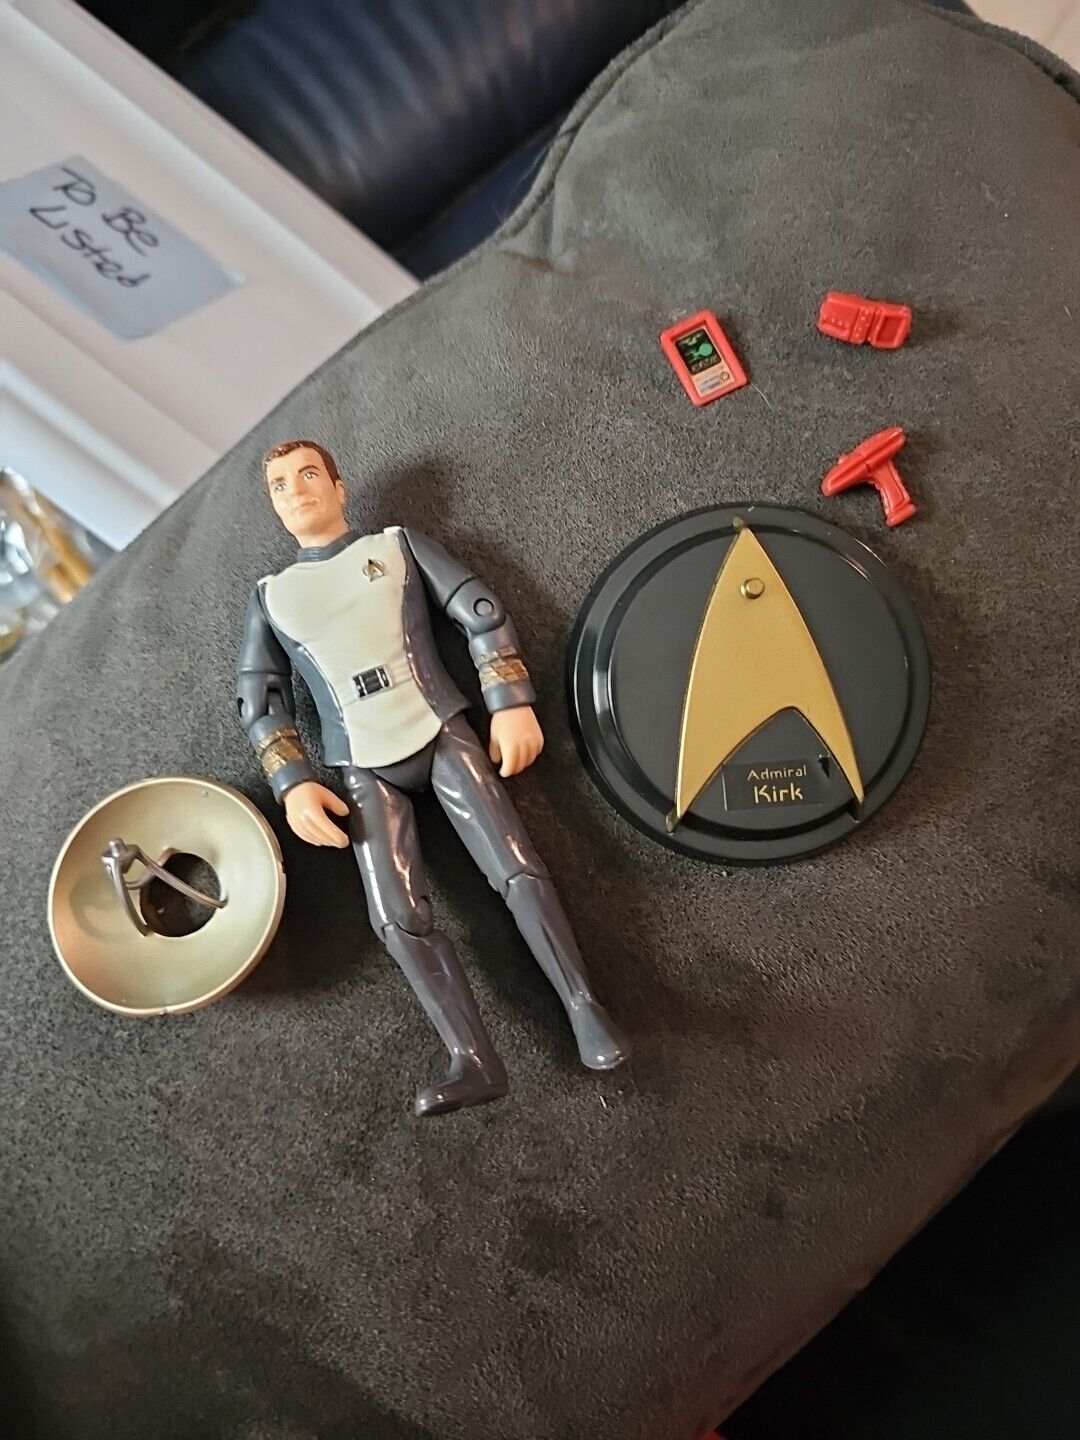 1995 Playmates Classic Star Trek Admiral Kirk Figure Complete